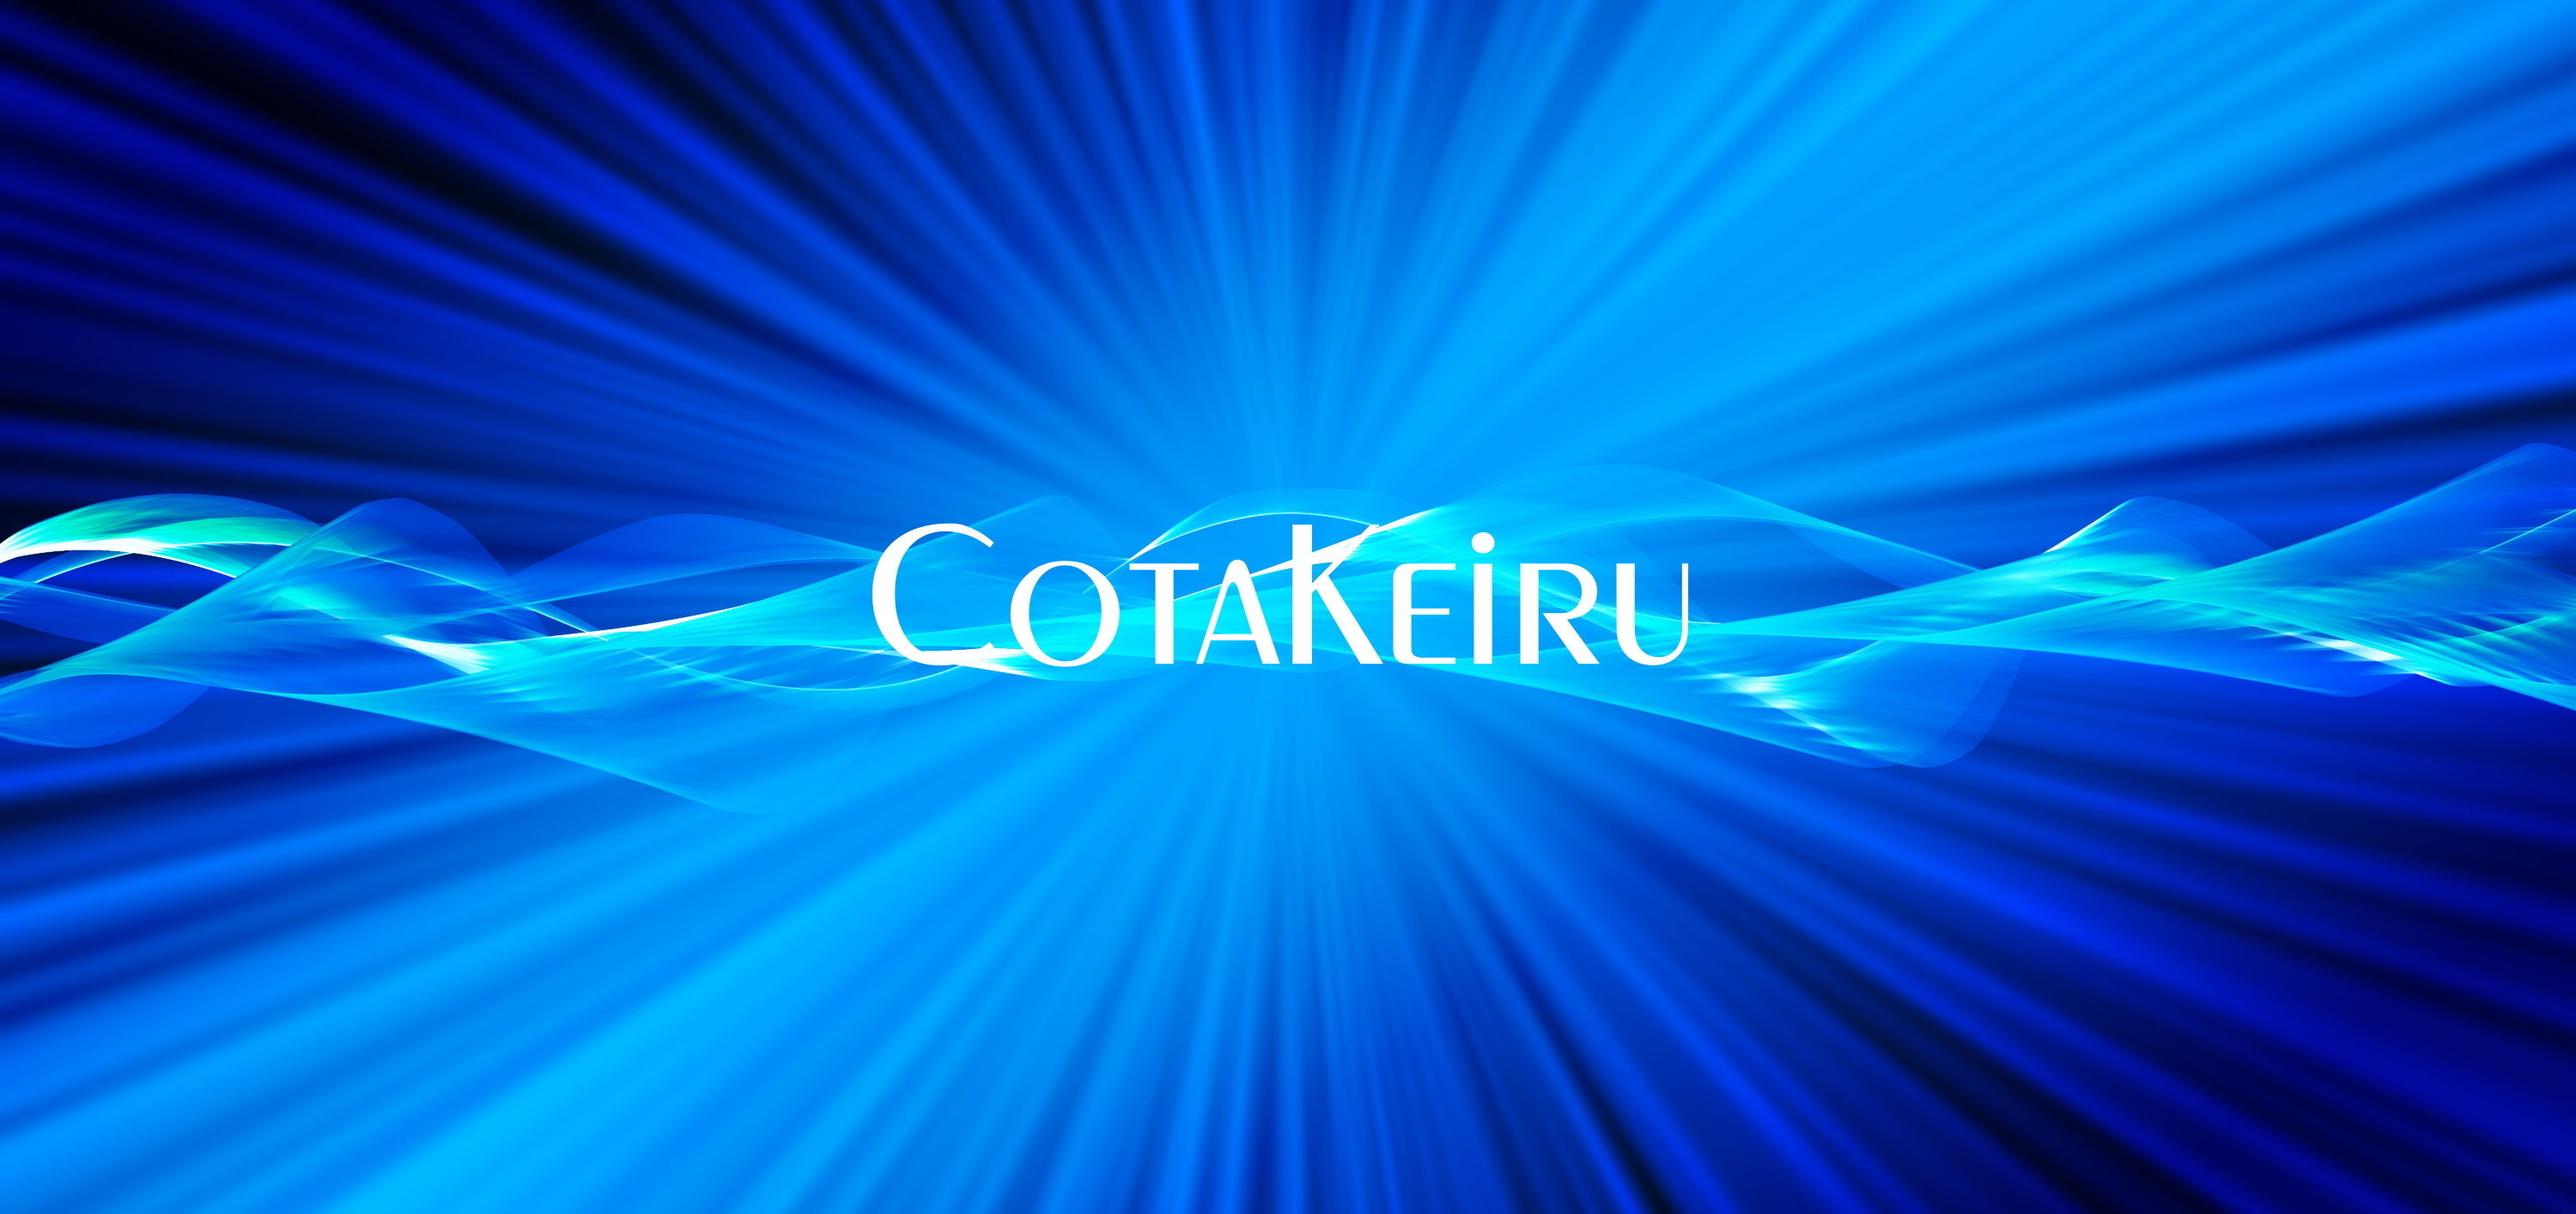 CotaKeiru